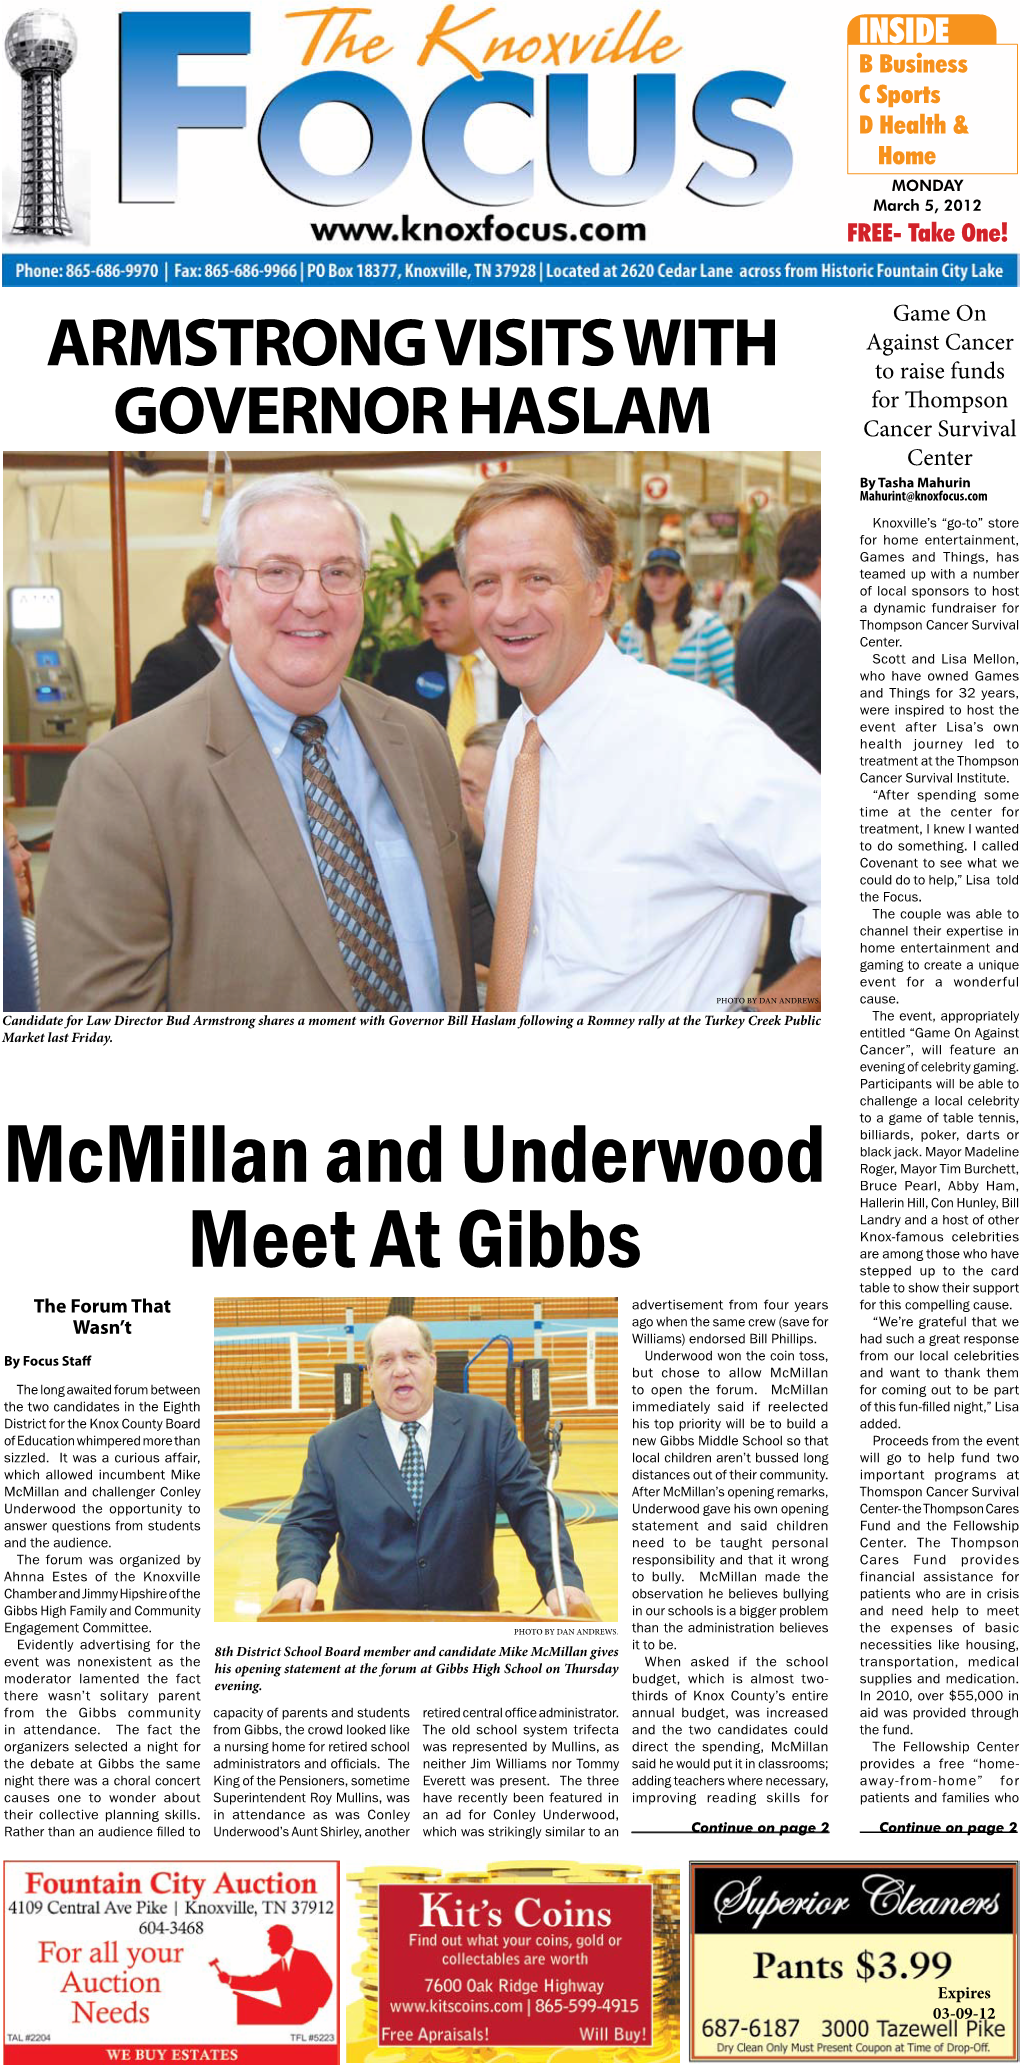 Mcmillan and Underwood Meet at Gibbs